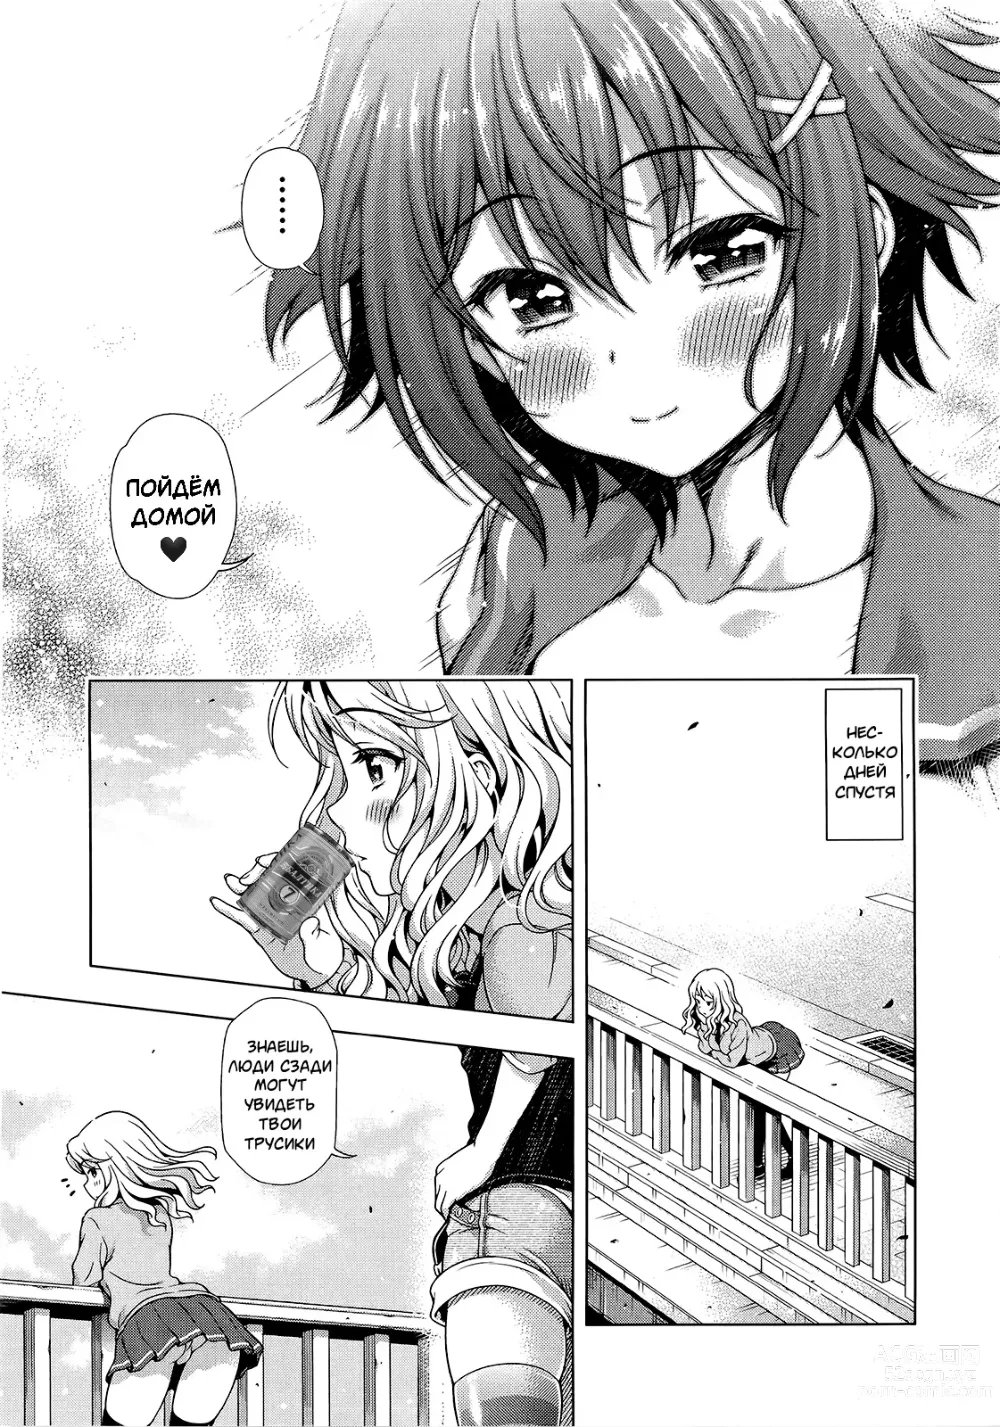 Page 43 of manga Кризис Аой!